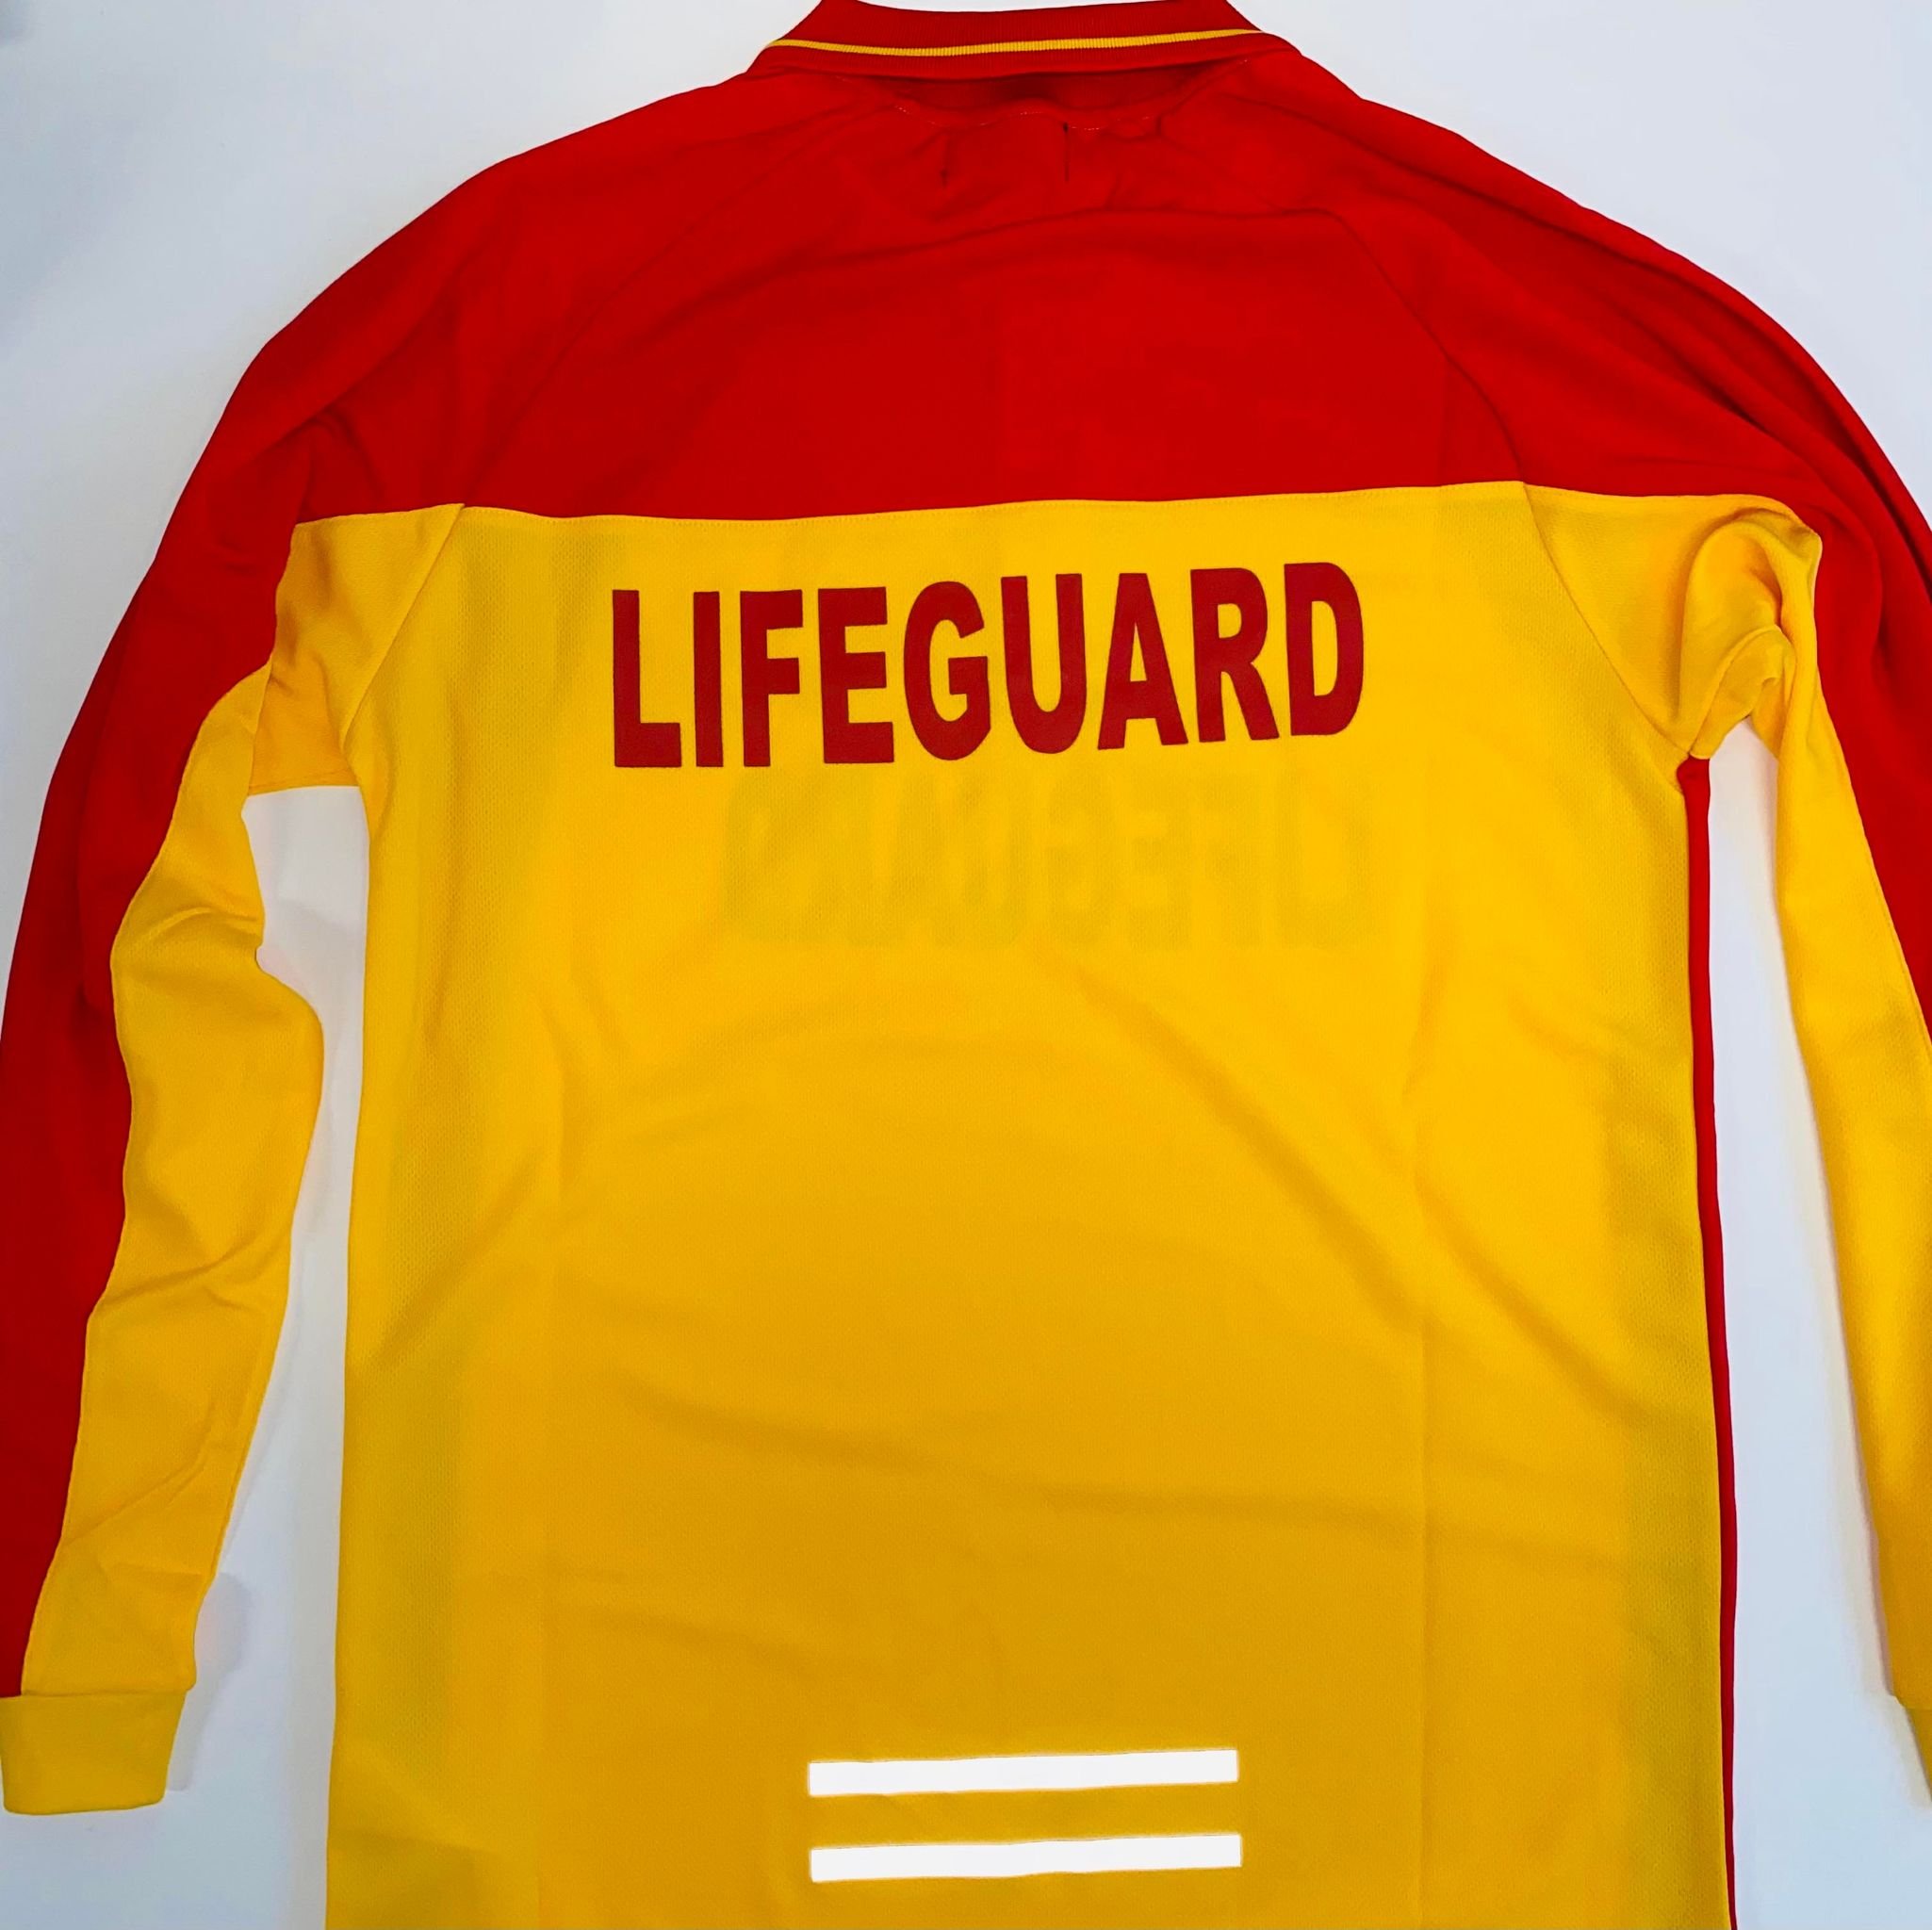 Lifeguard - Polo shirt - $30.00